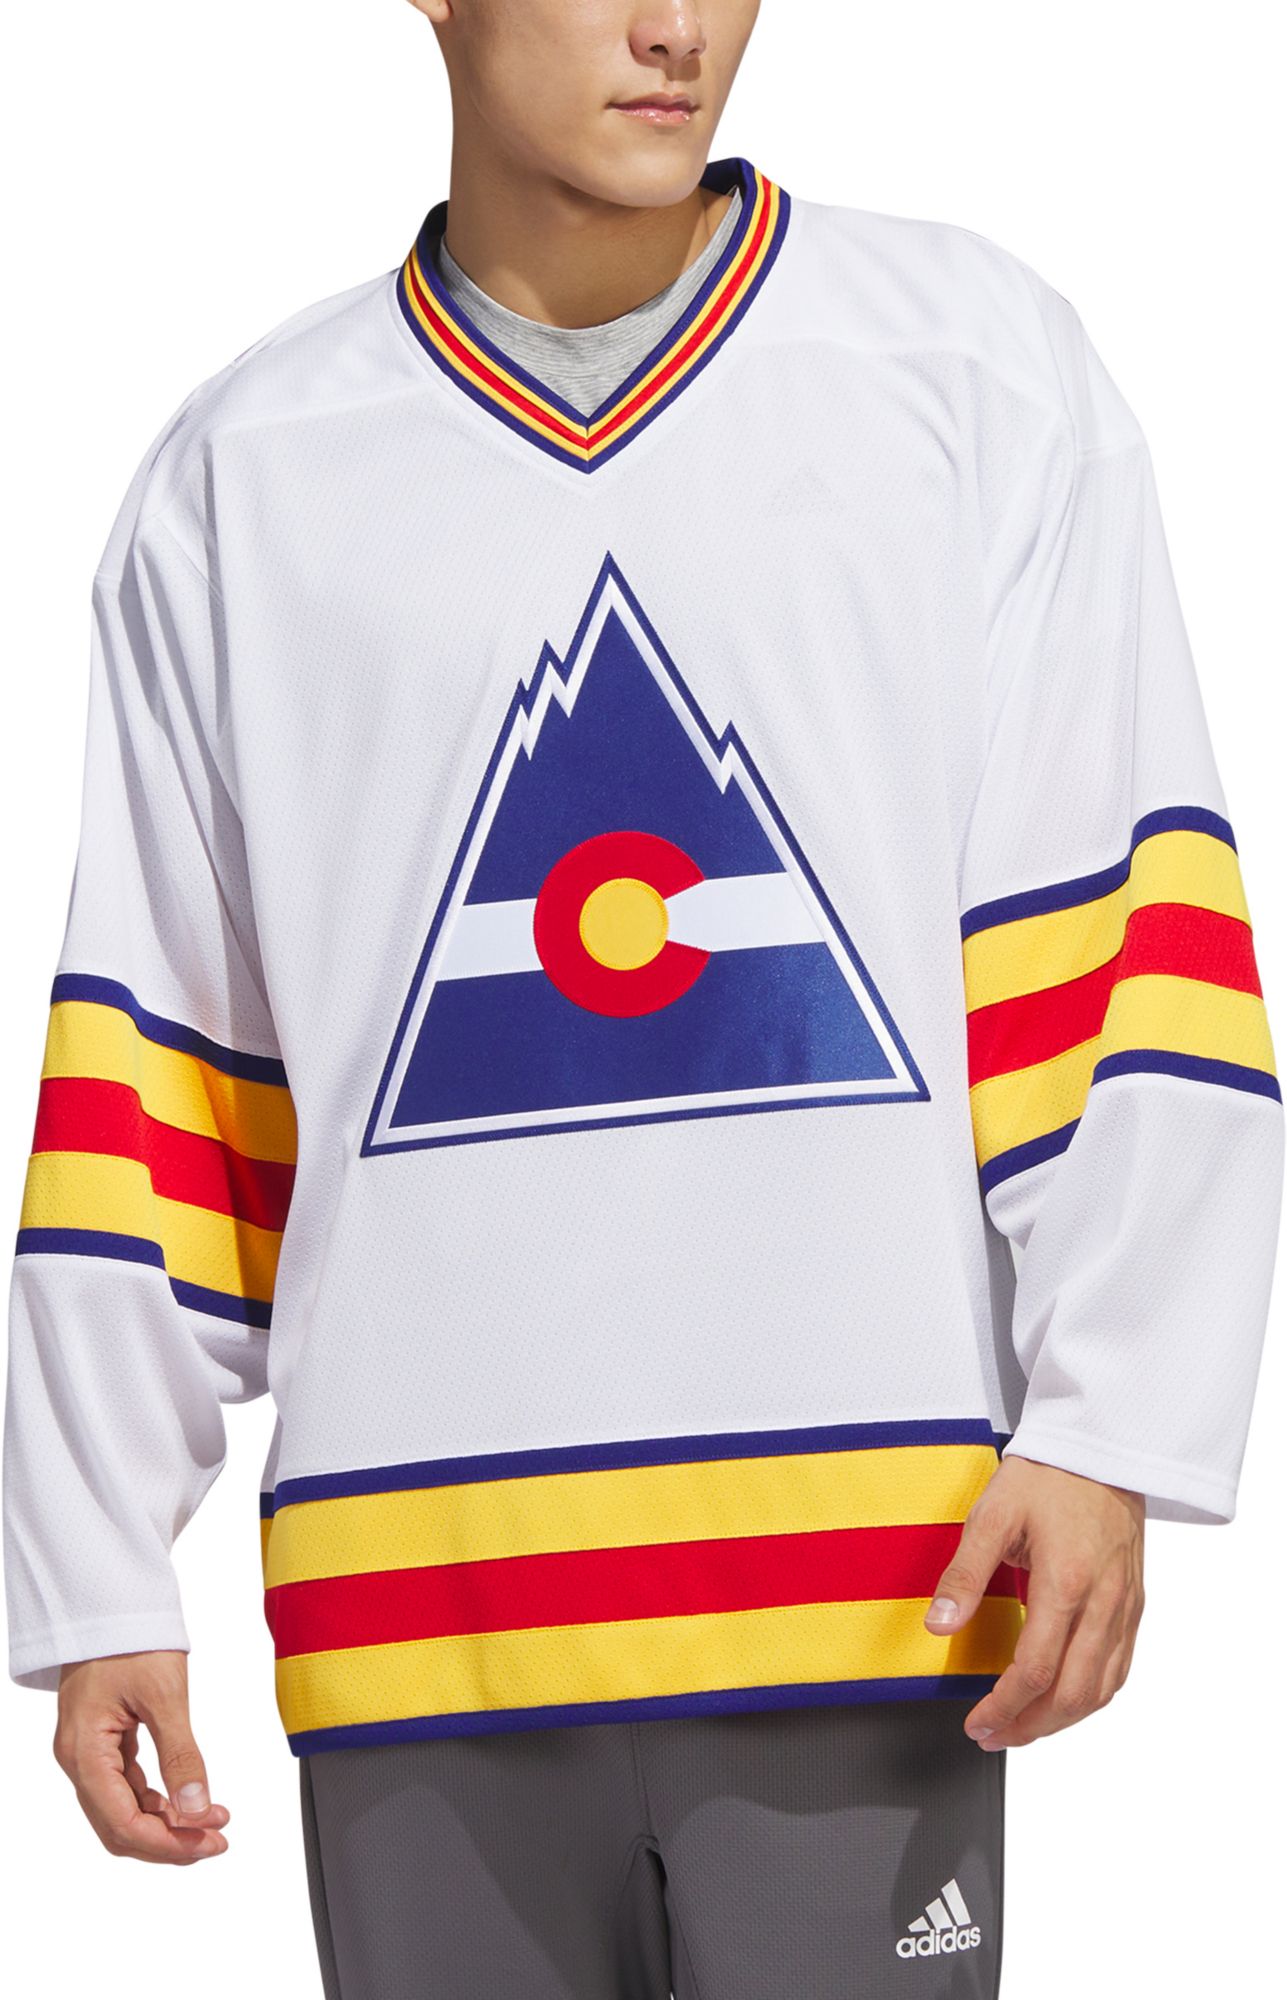 Colorado Avalanche fan favorite jersey